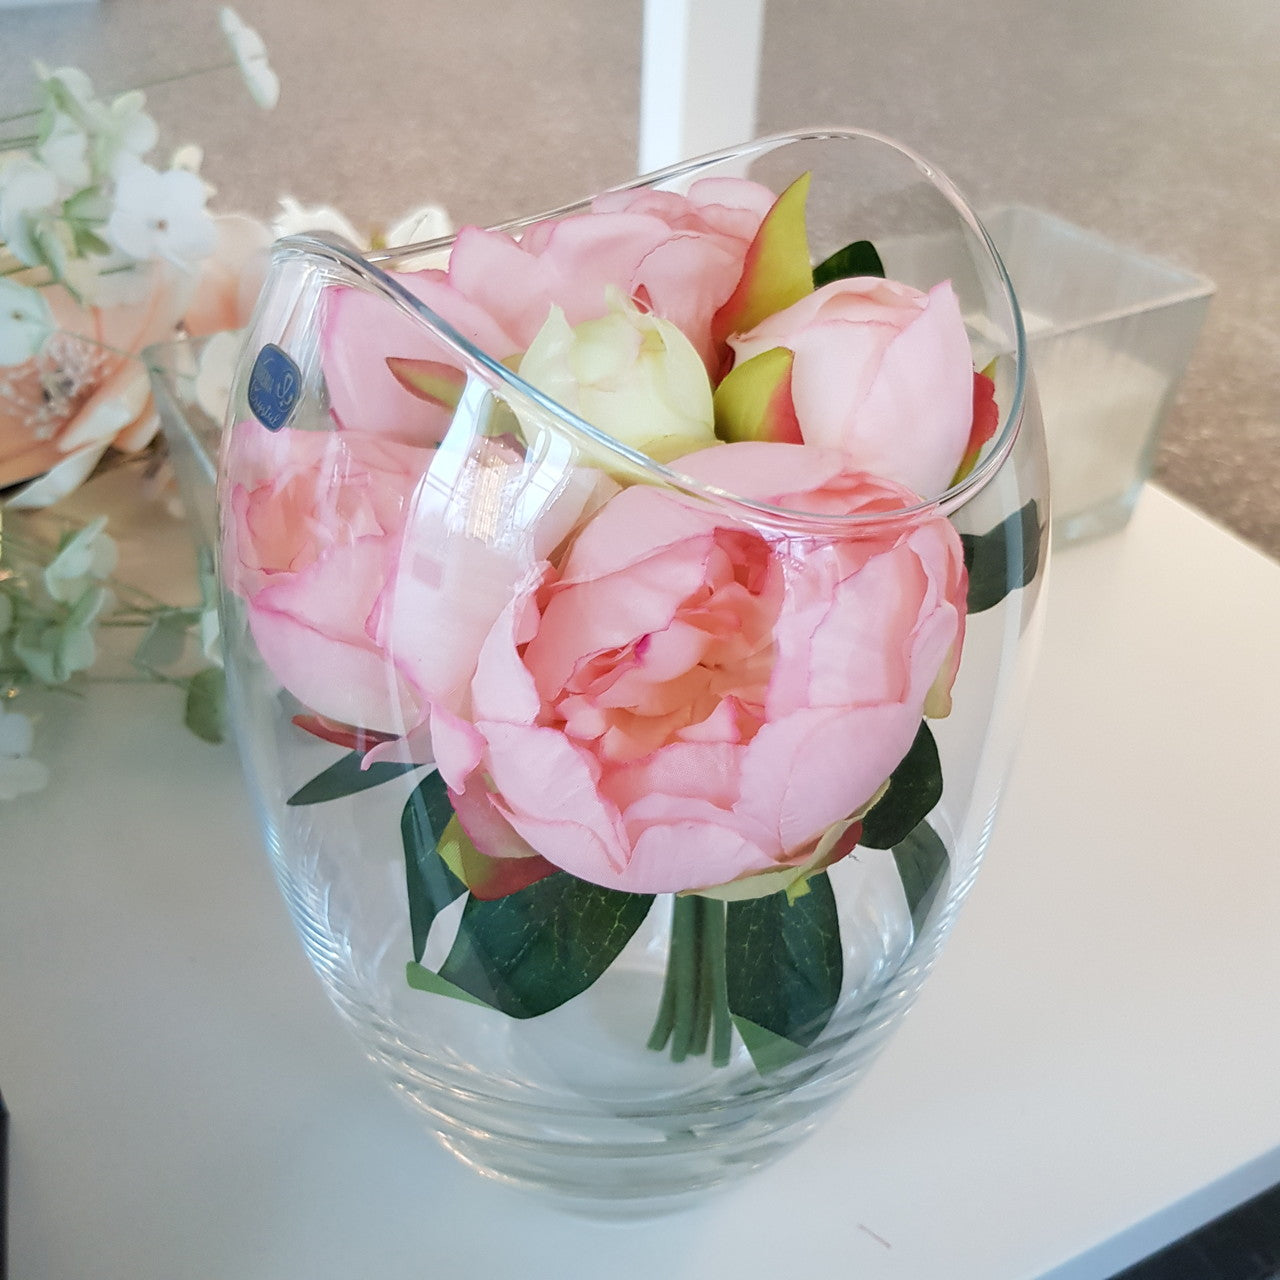 Kunstblume Päonien-Bouquet 20cm